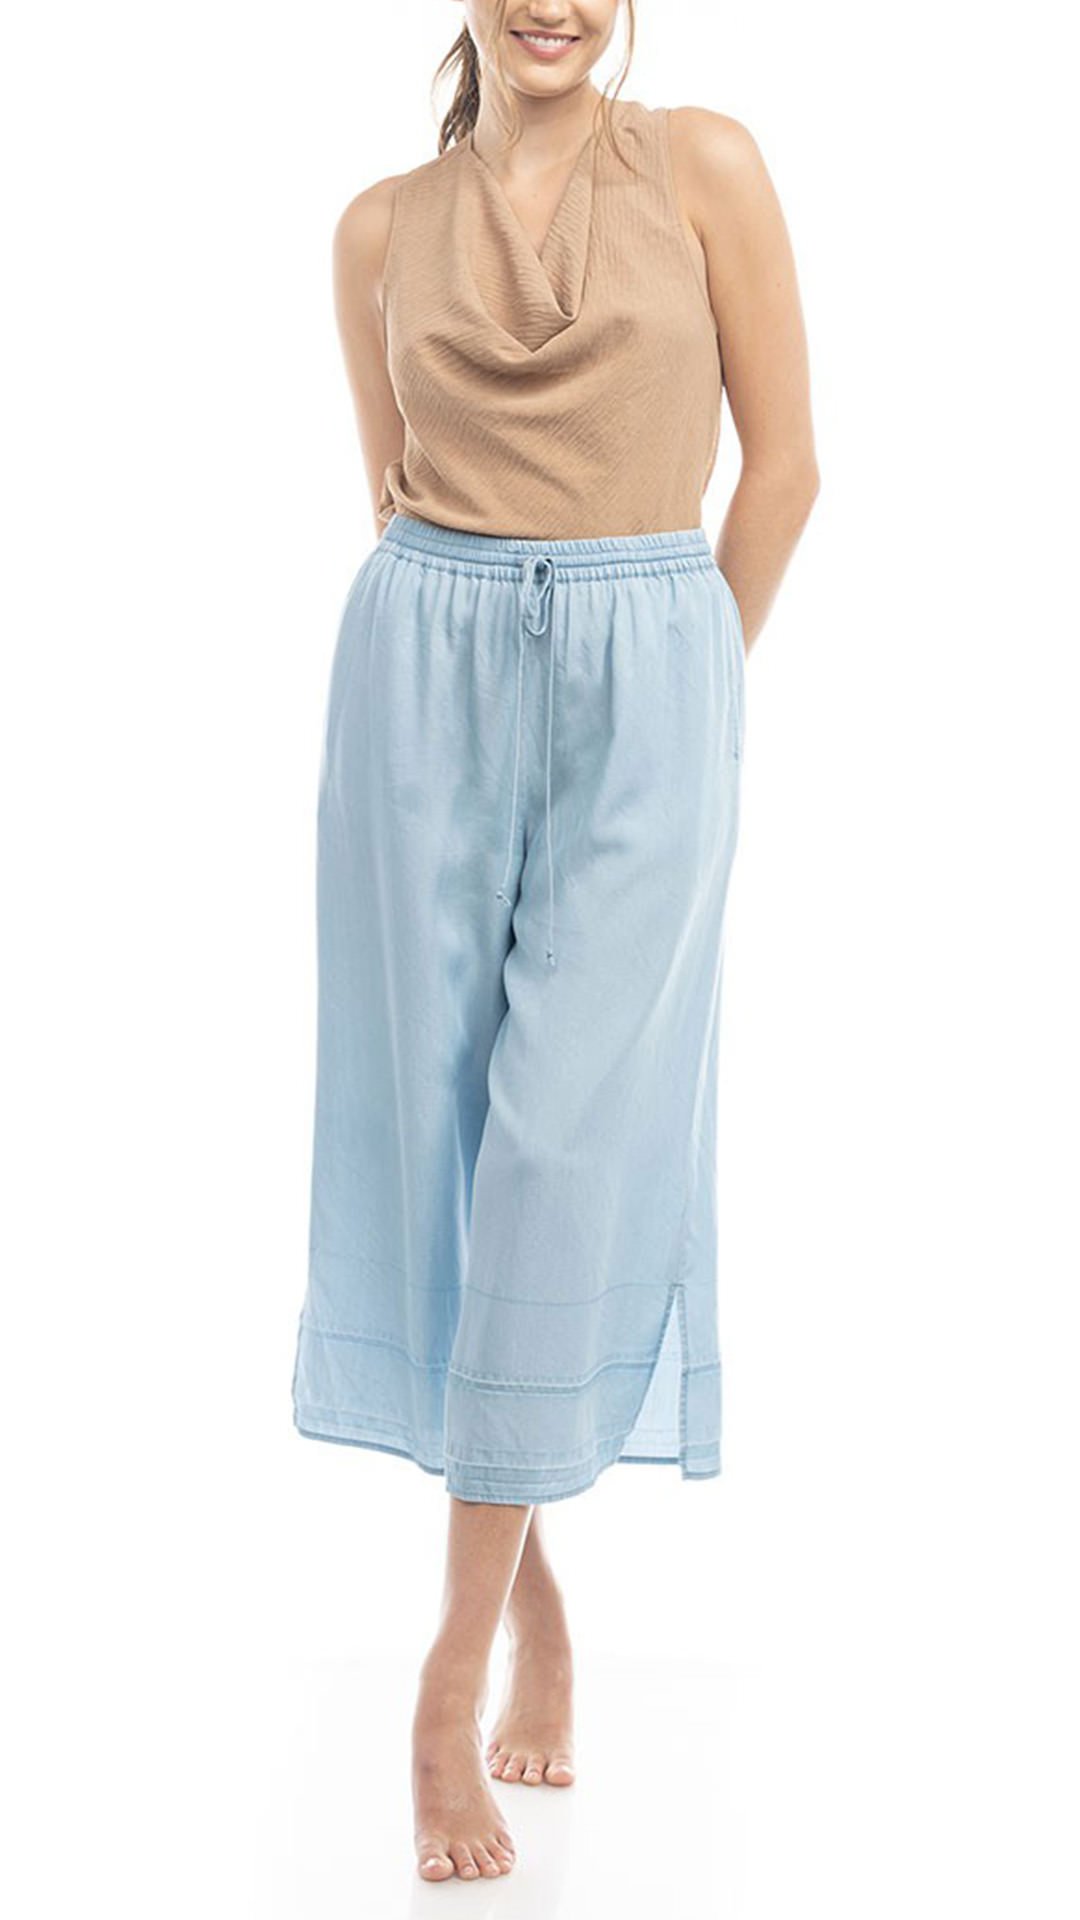 Pantalon corto ancho Azul claro LPL1840